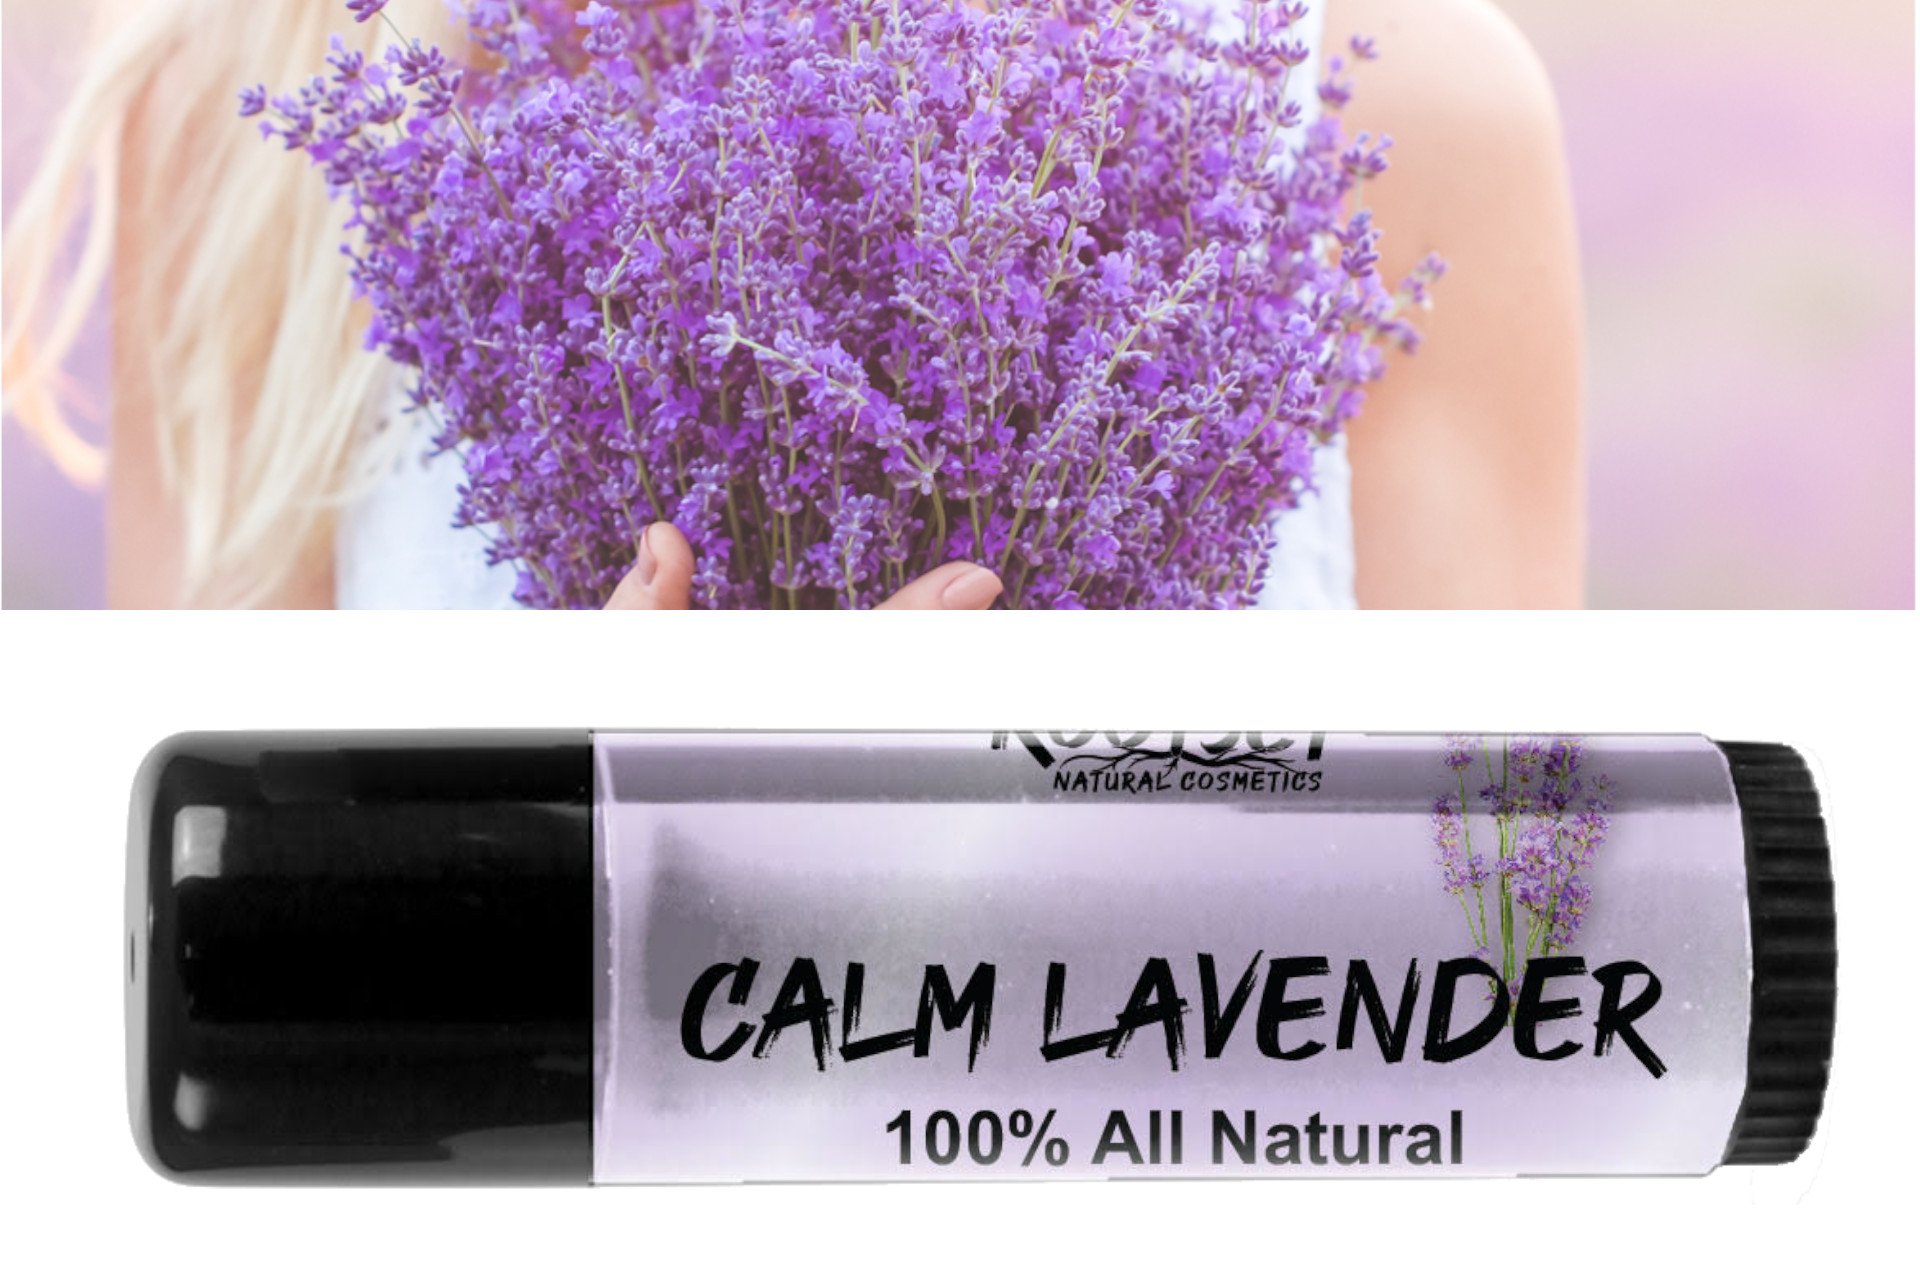 Calm Lavender Jumbo 100% All Natural Lip & Body Balm.jpg